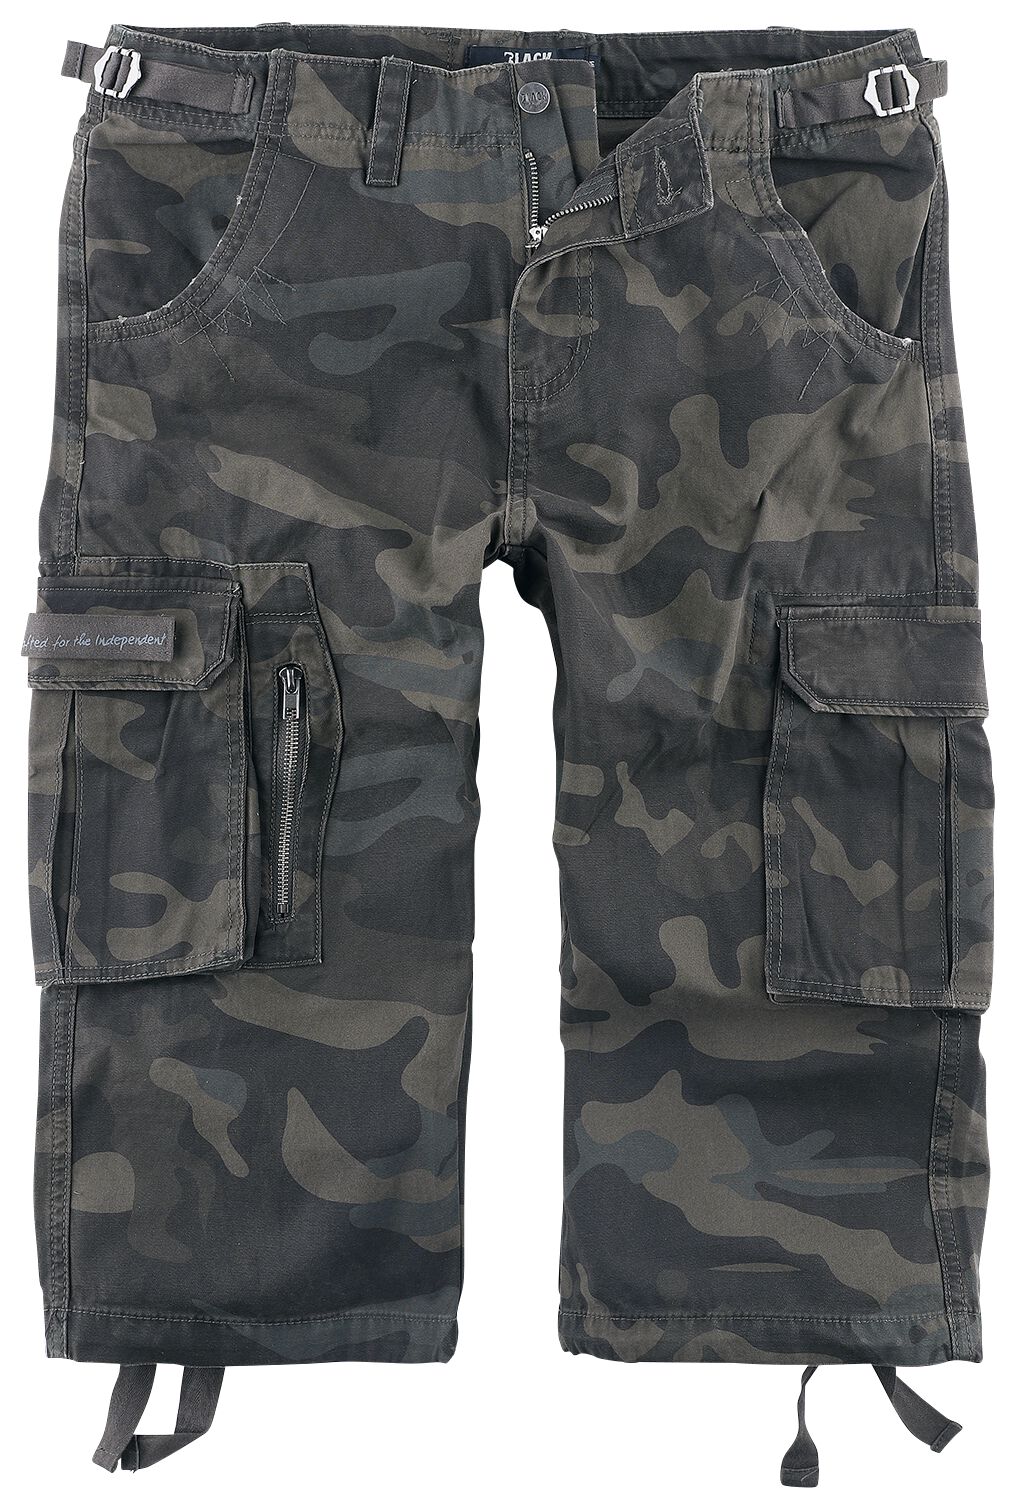 Black Premium by EMP 3/4 Army Vintage Shorts Short darkcamo in 3XL